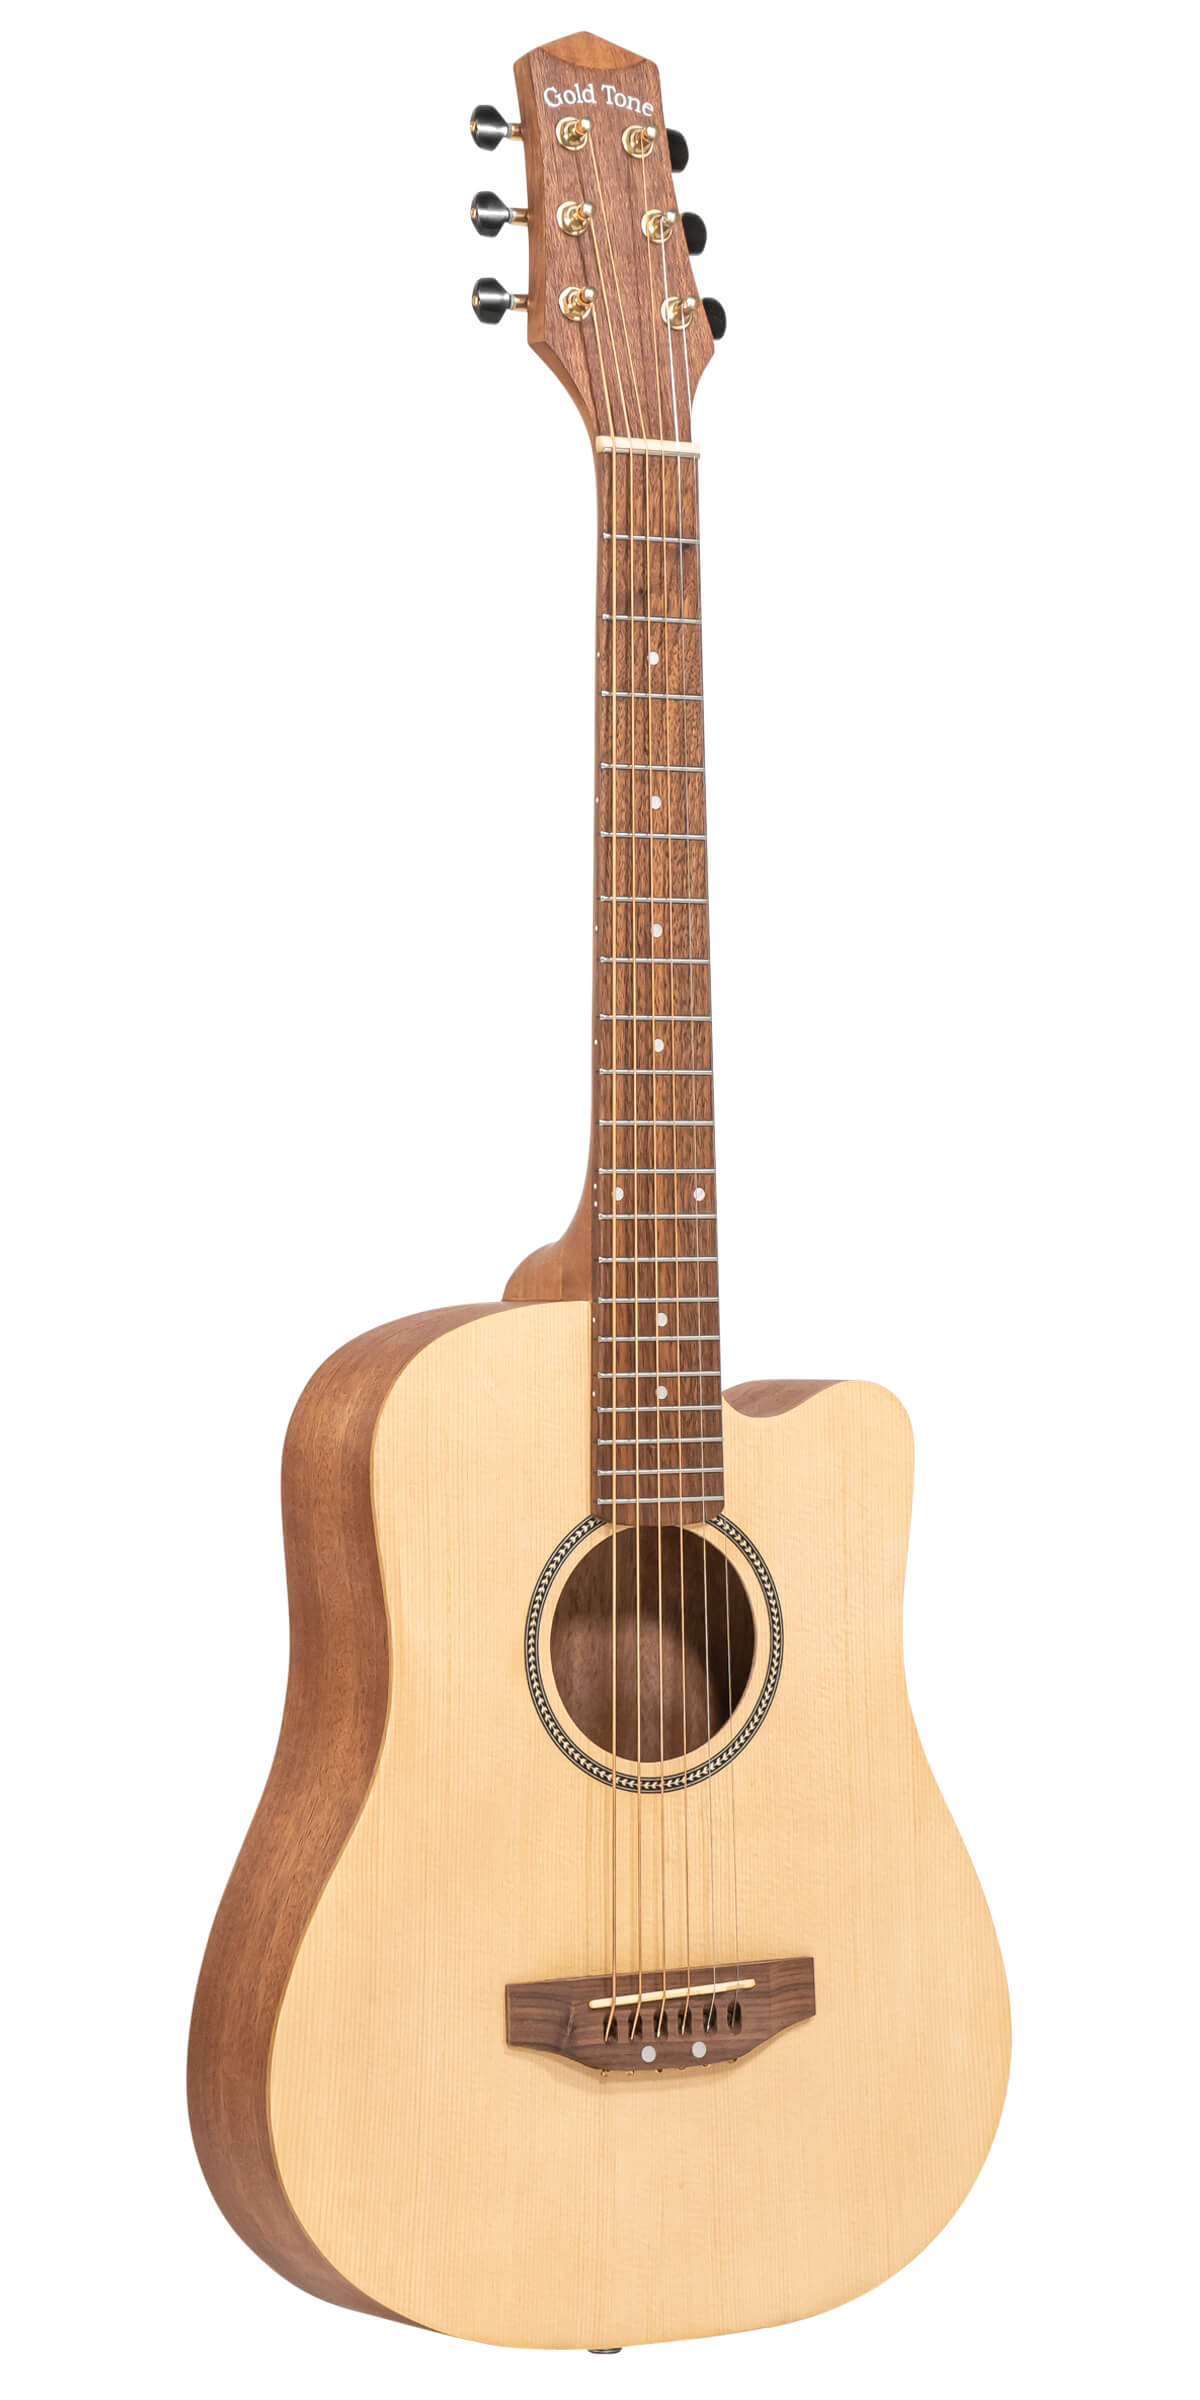 M-Guitar: Acoustic-Electric Micro-Guitar | Gold Tone Folk Instruments